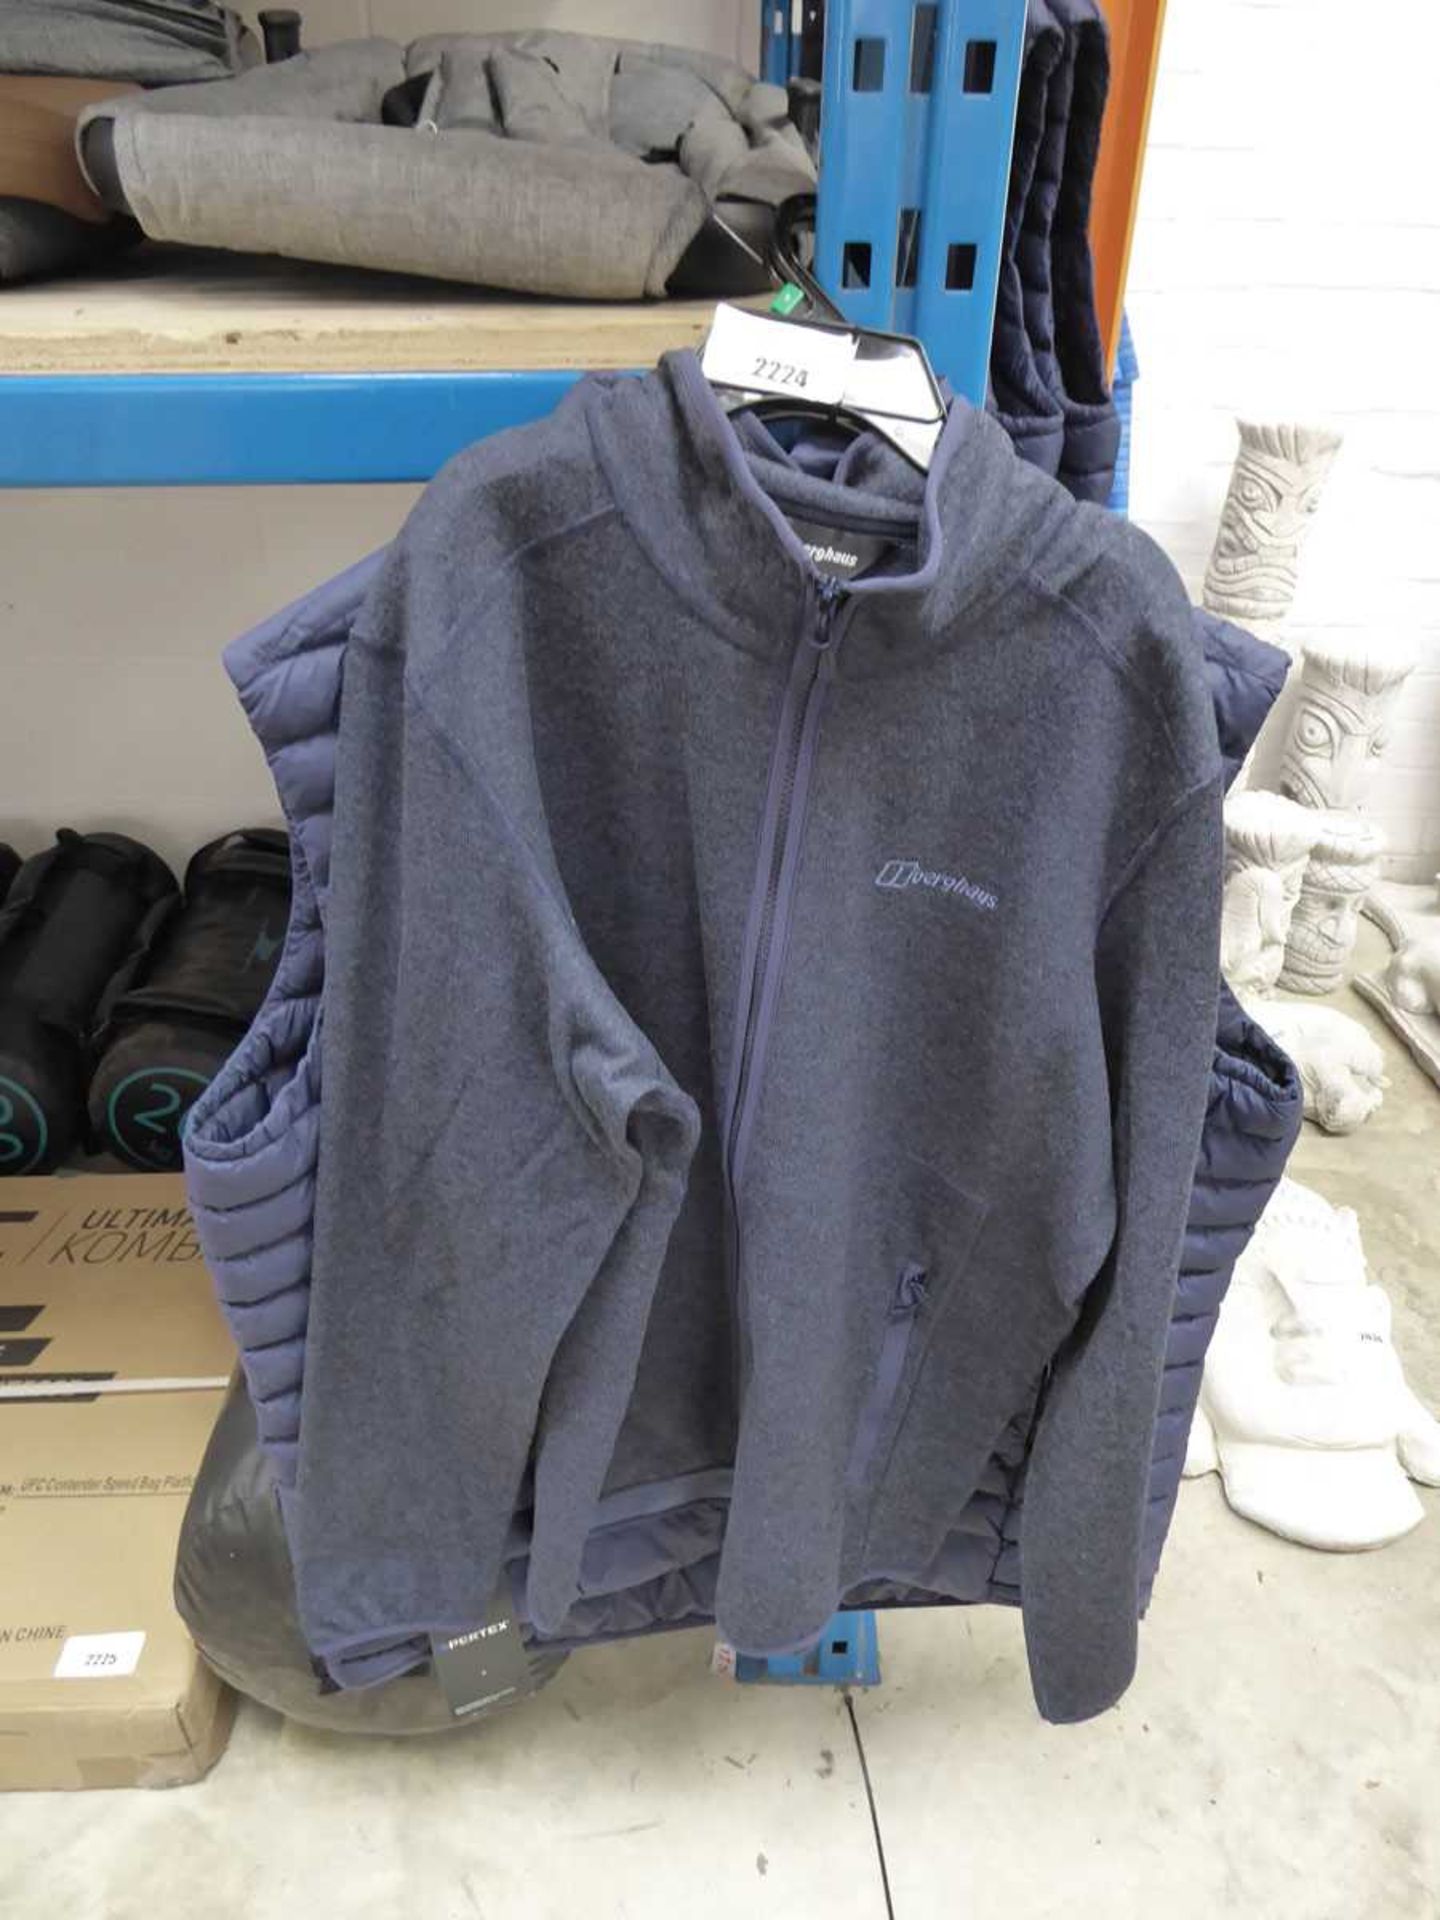 +VAT Berghaus navy blue full zip gilet (size XXL) with Berghaus full zip jacket in navy (size L)